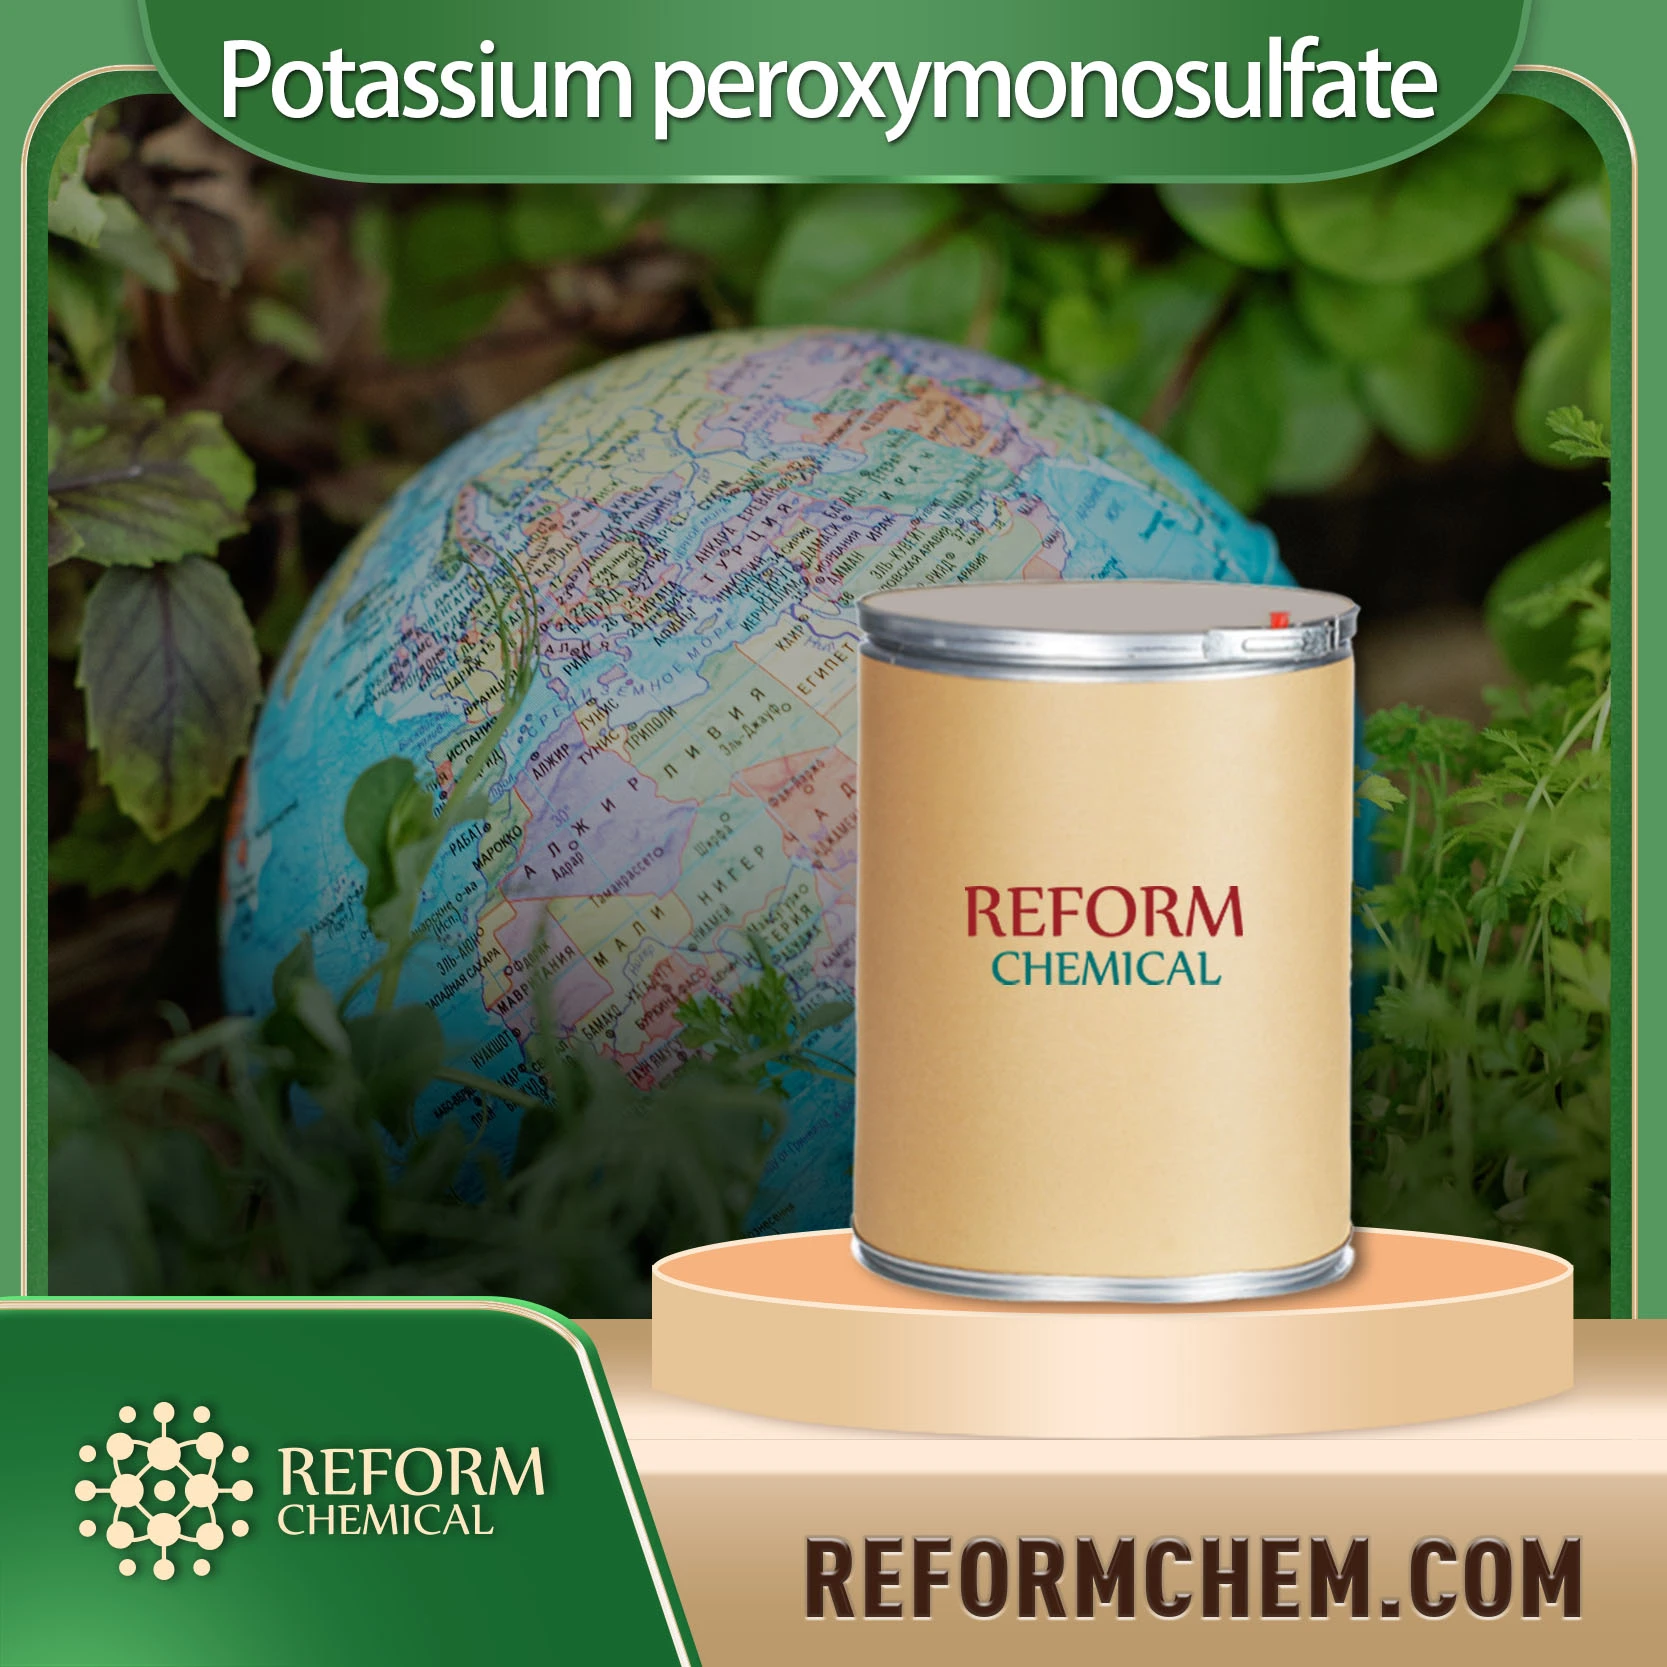 Potassium peroxymonosulfate